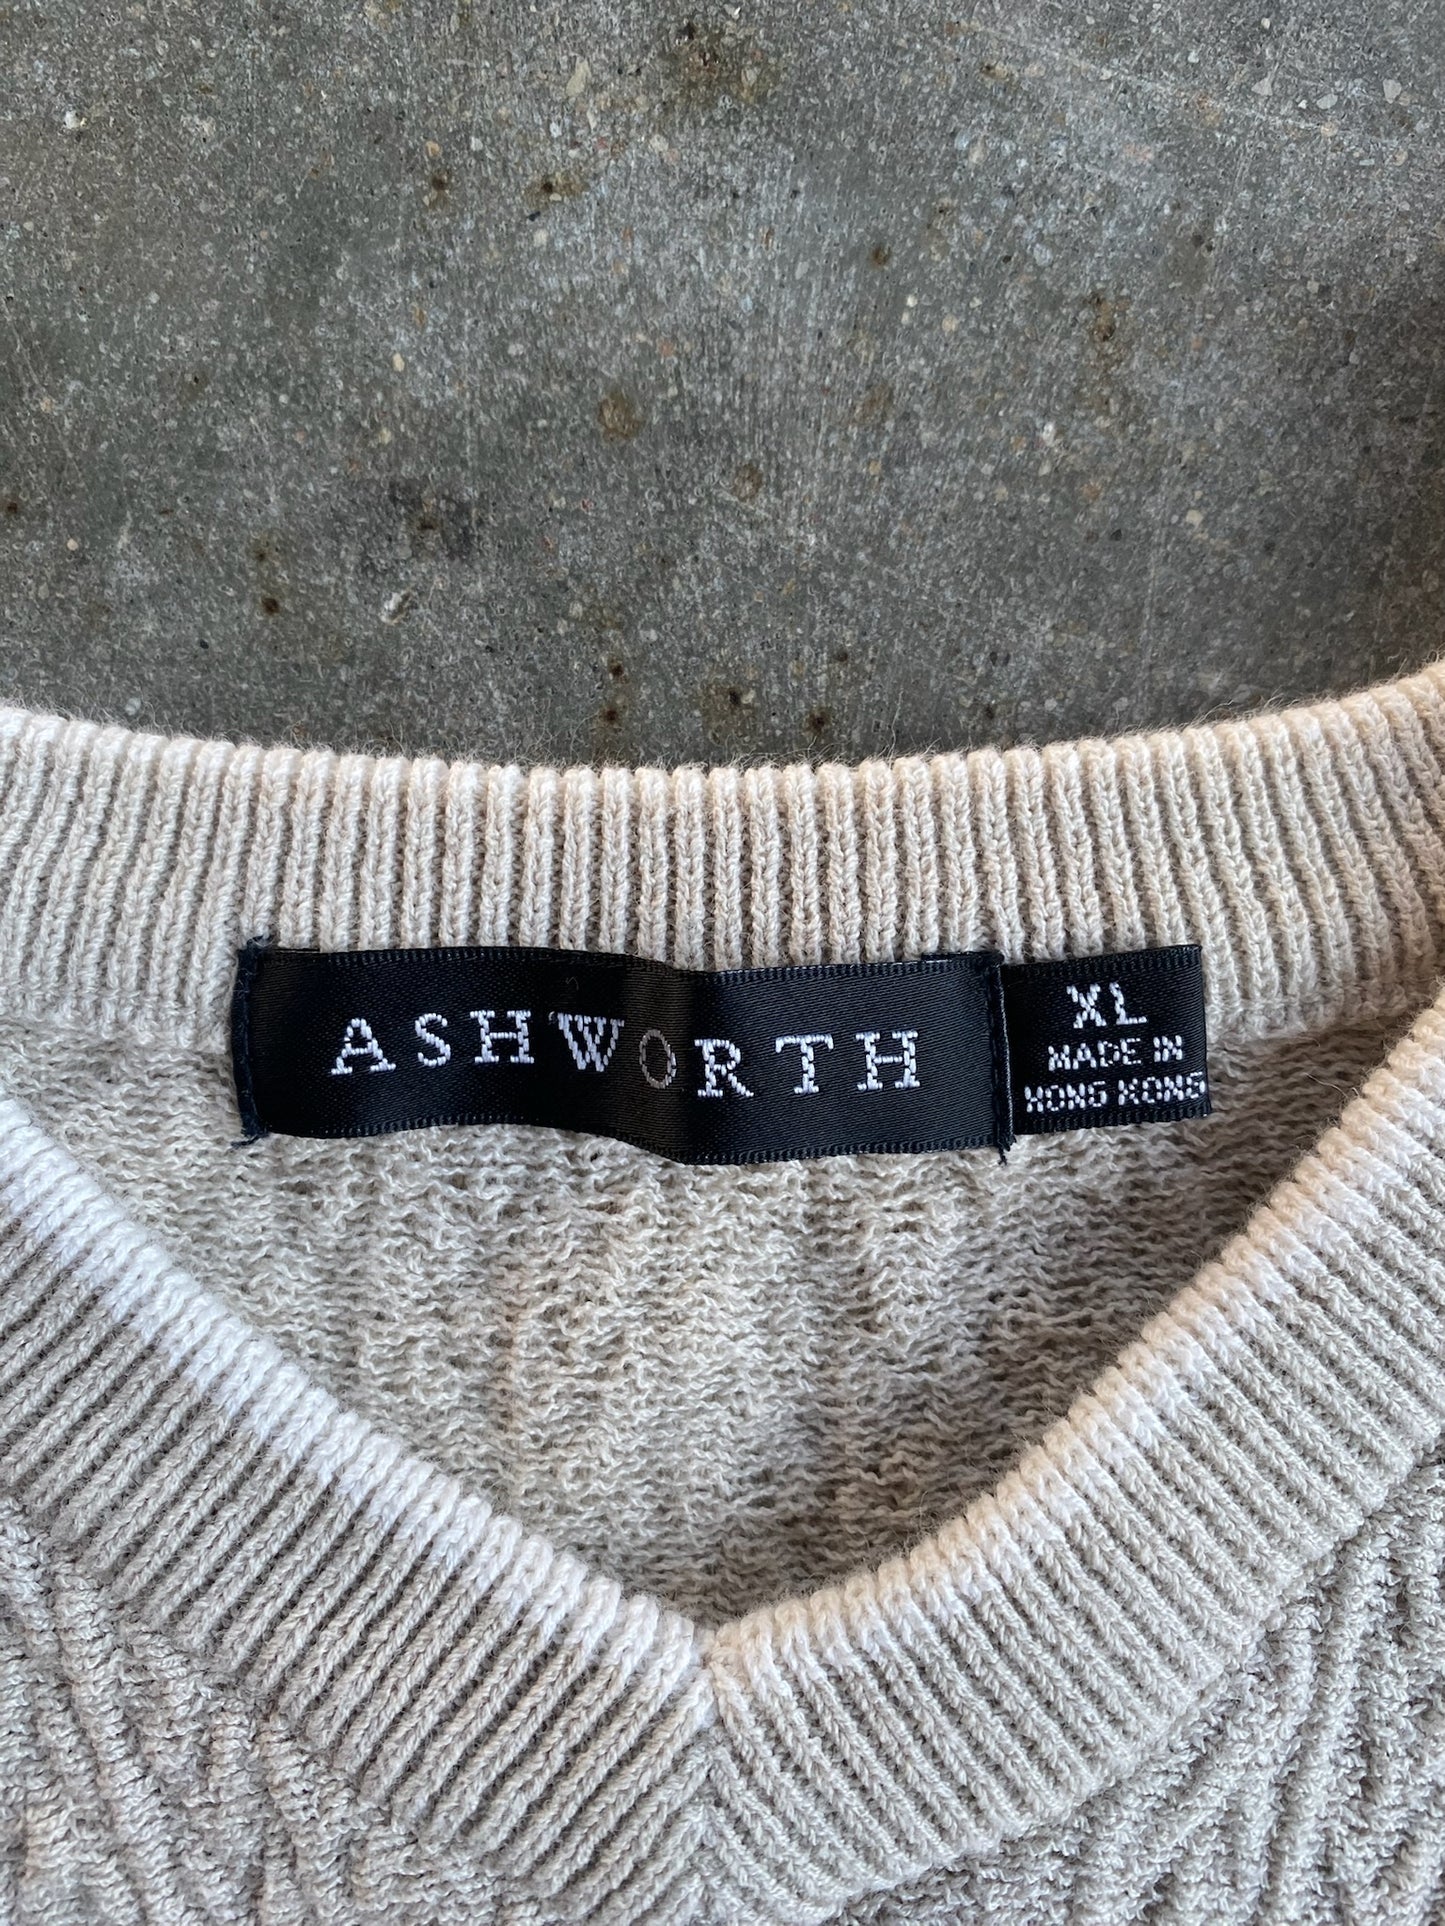 Vintage Ashworth Sweater Vest - XL